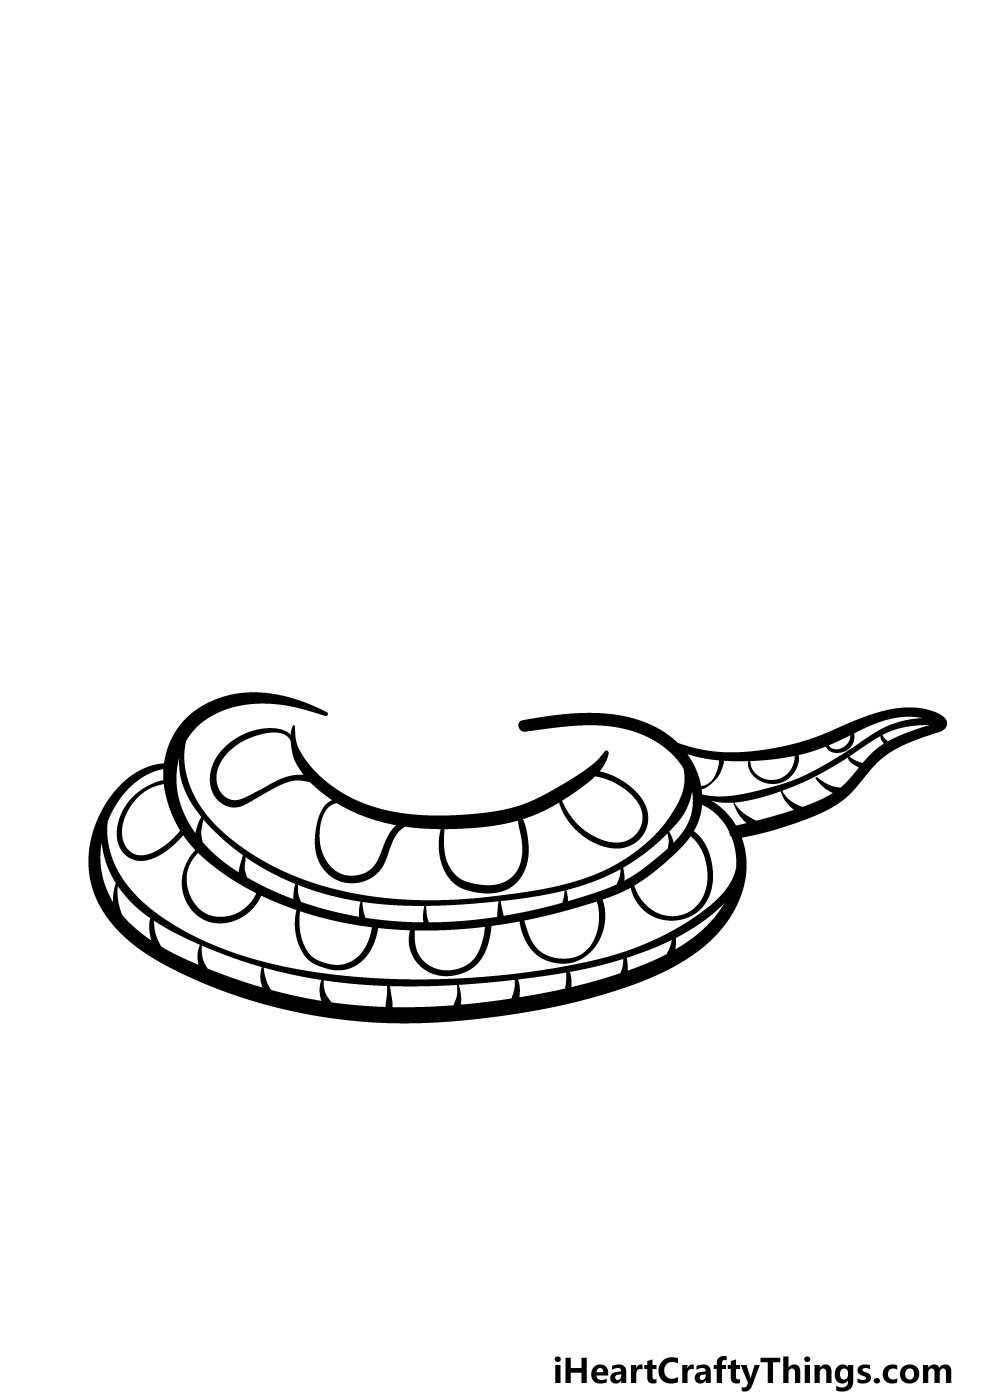 how to draw a cartoon snake step 2